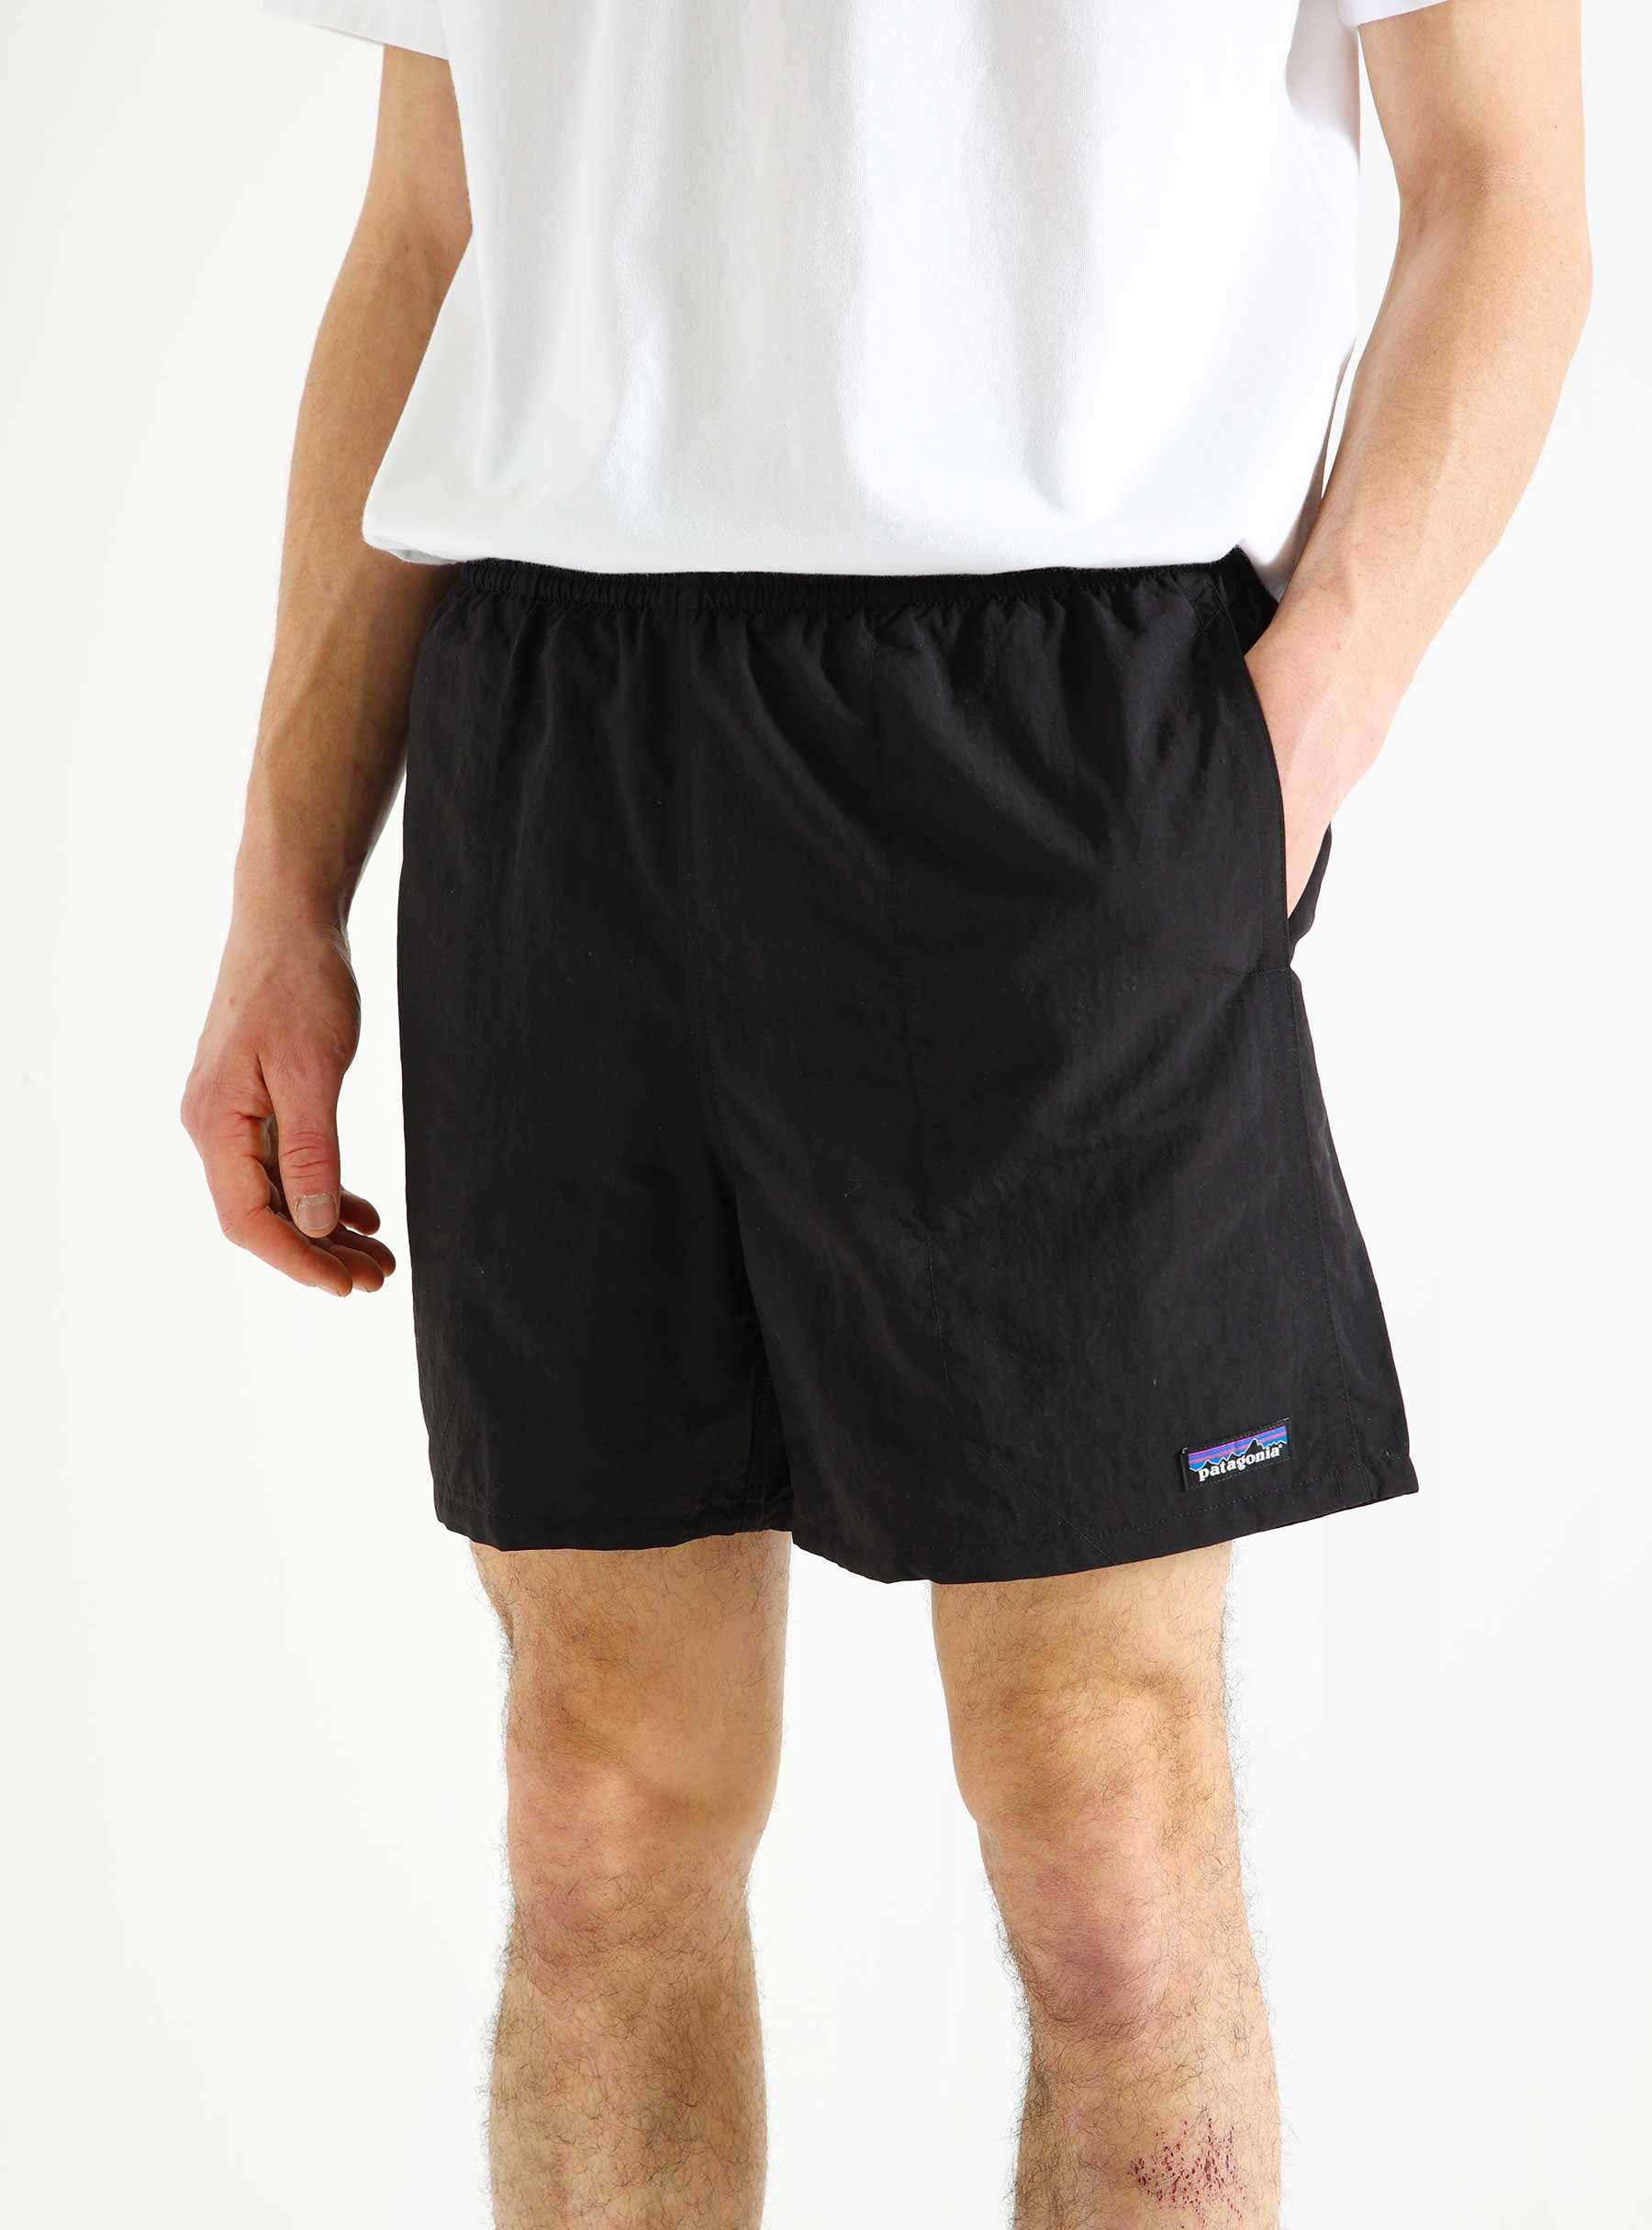 M's Baggies Shorts 5 inch Black 57022-BLK